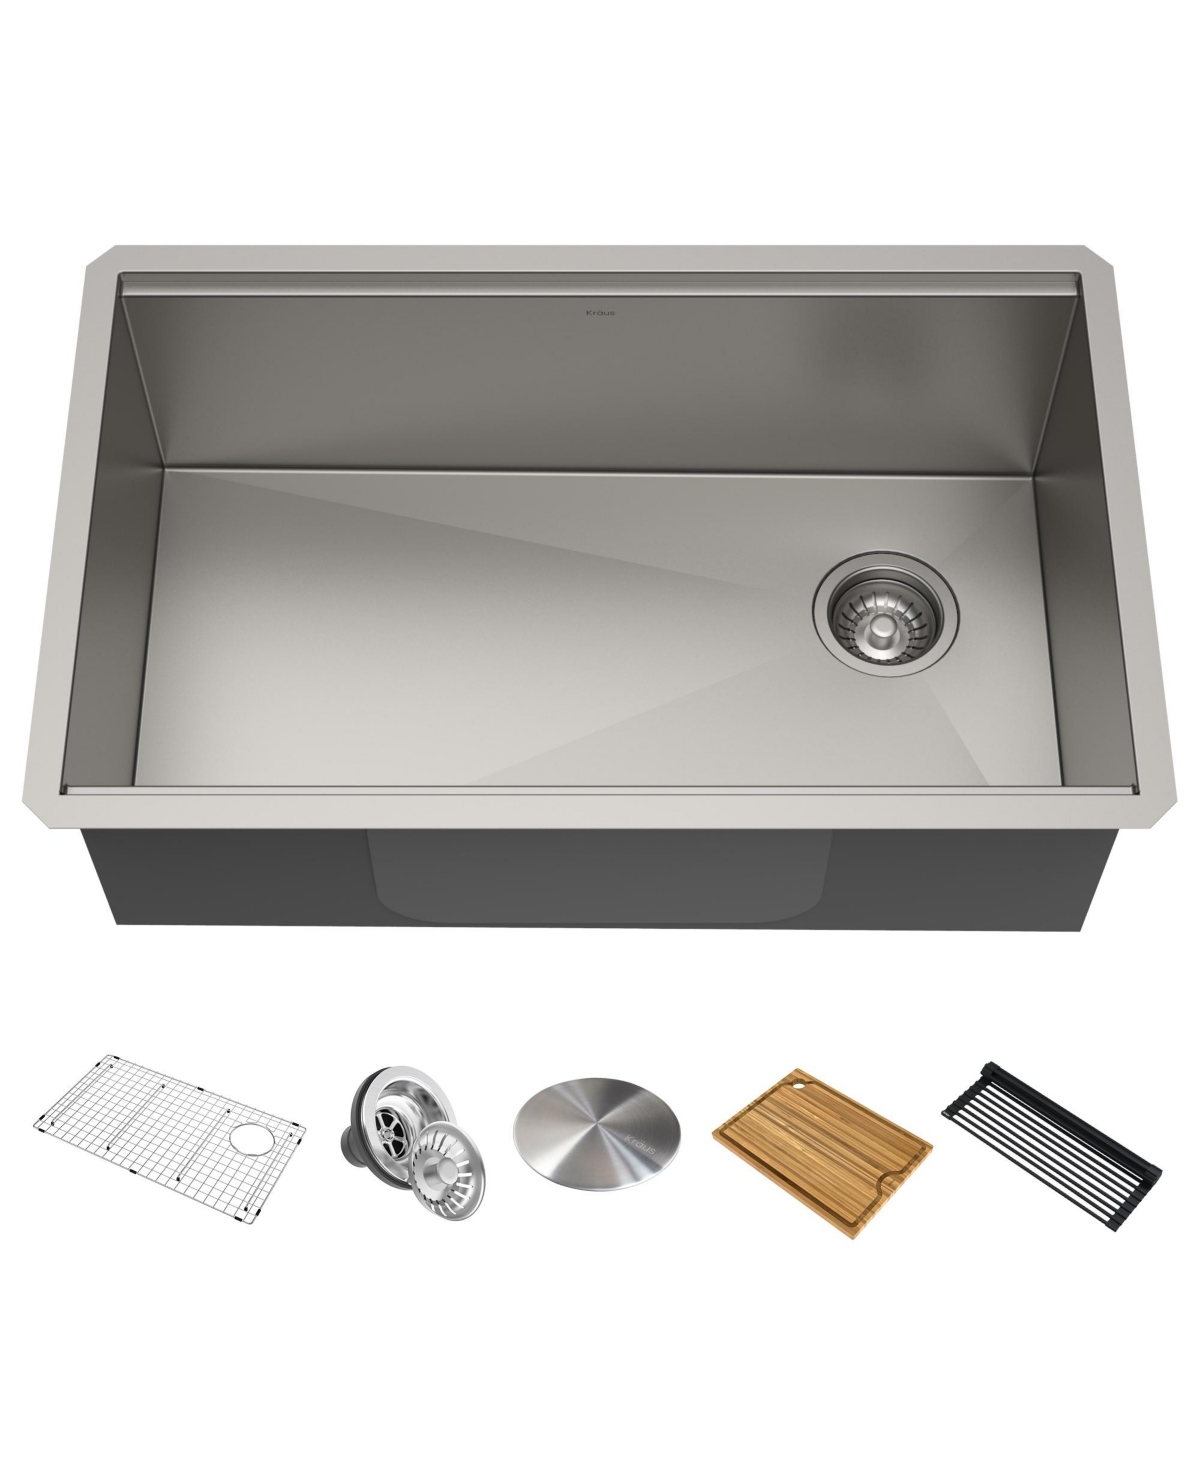 Kore 30 in. Workstation Undermount 16 Gauge Single Bowl Stainless Steel Kitchen Sink with Accessories - Stainless steel